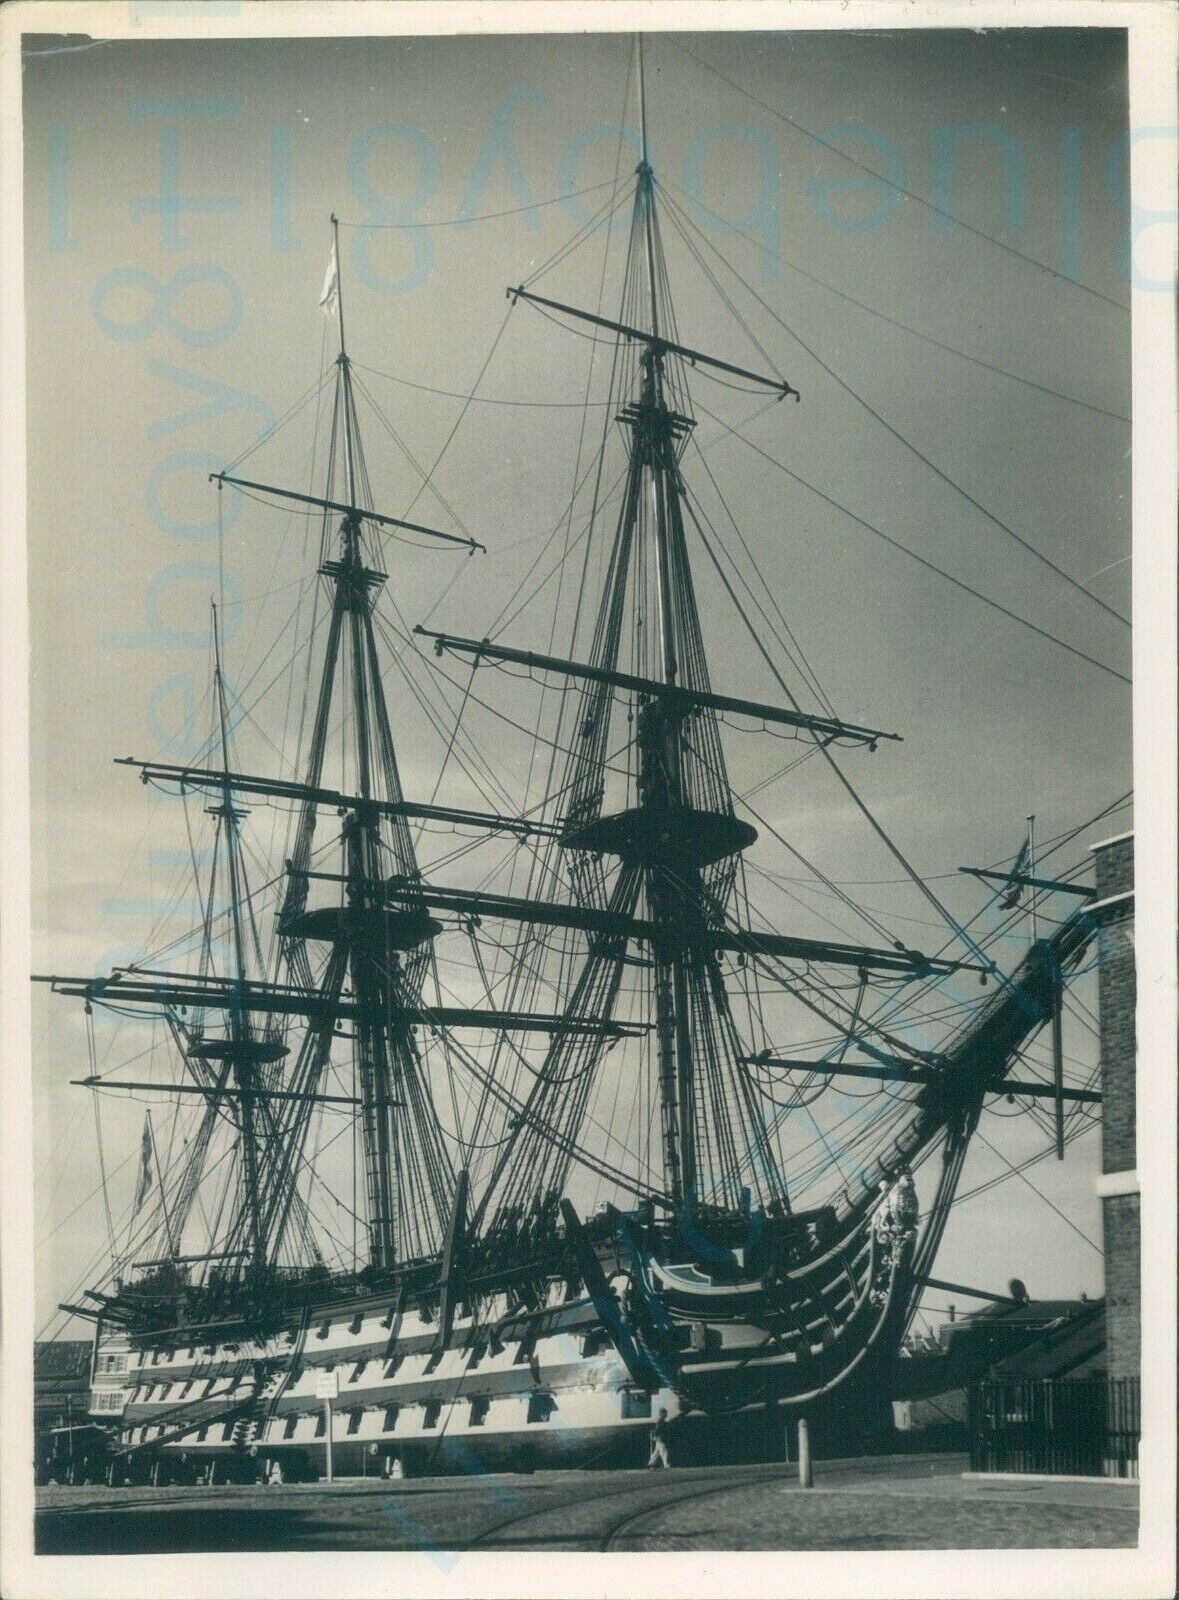 Portsmouth HMS Nelson Press photo War propaganda caption on back  8*6